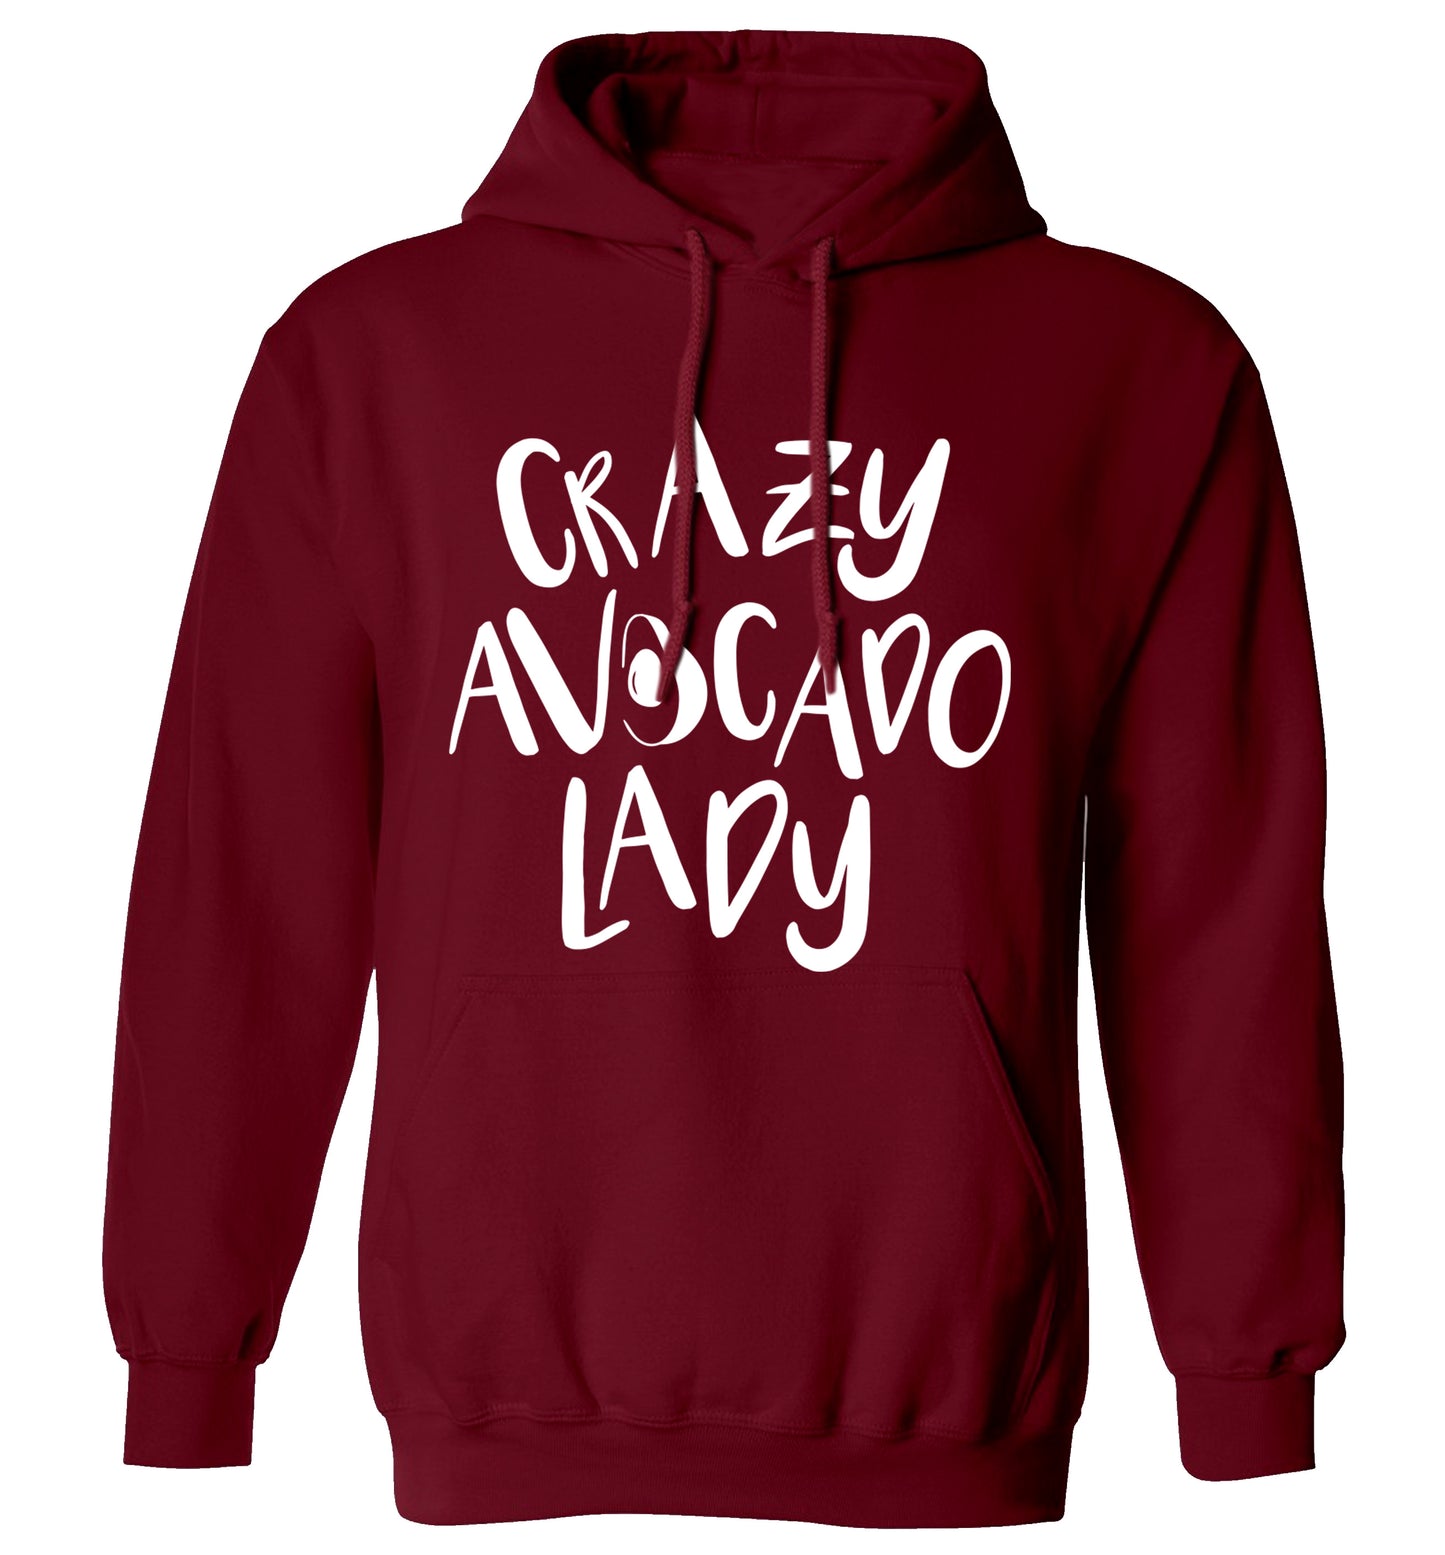 Crazy avocado lady adults unisex maroon hoodie 2XL